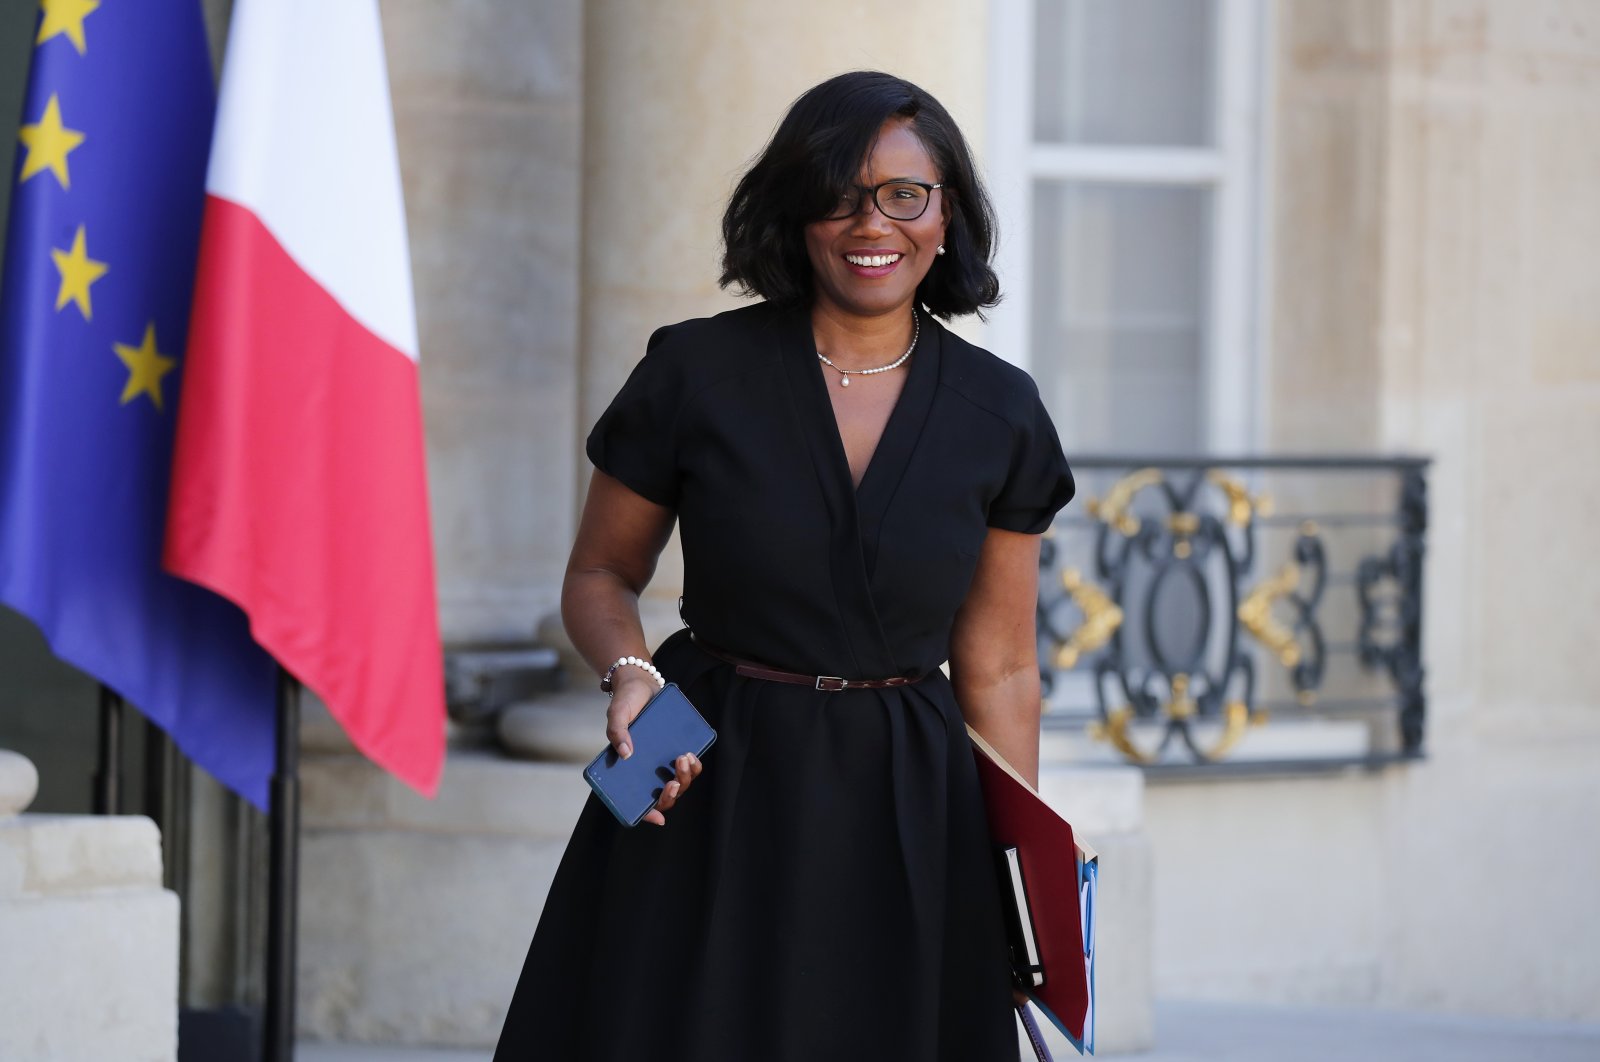 Then-French Junior Minister for Gender Equality Elisabeth Moreno arrives at the Elysee Palace, Paris, France, July 7, 2020. (AP Photo)